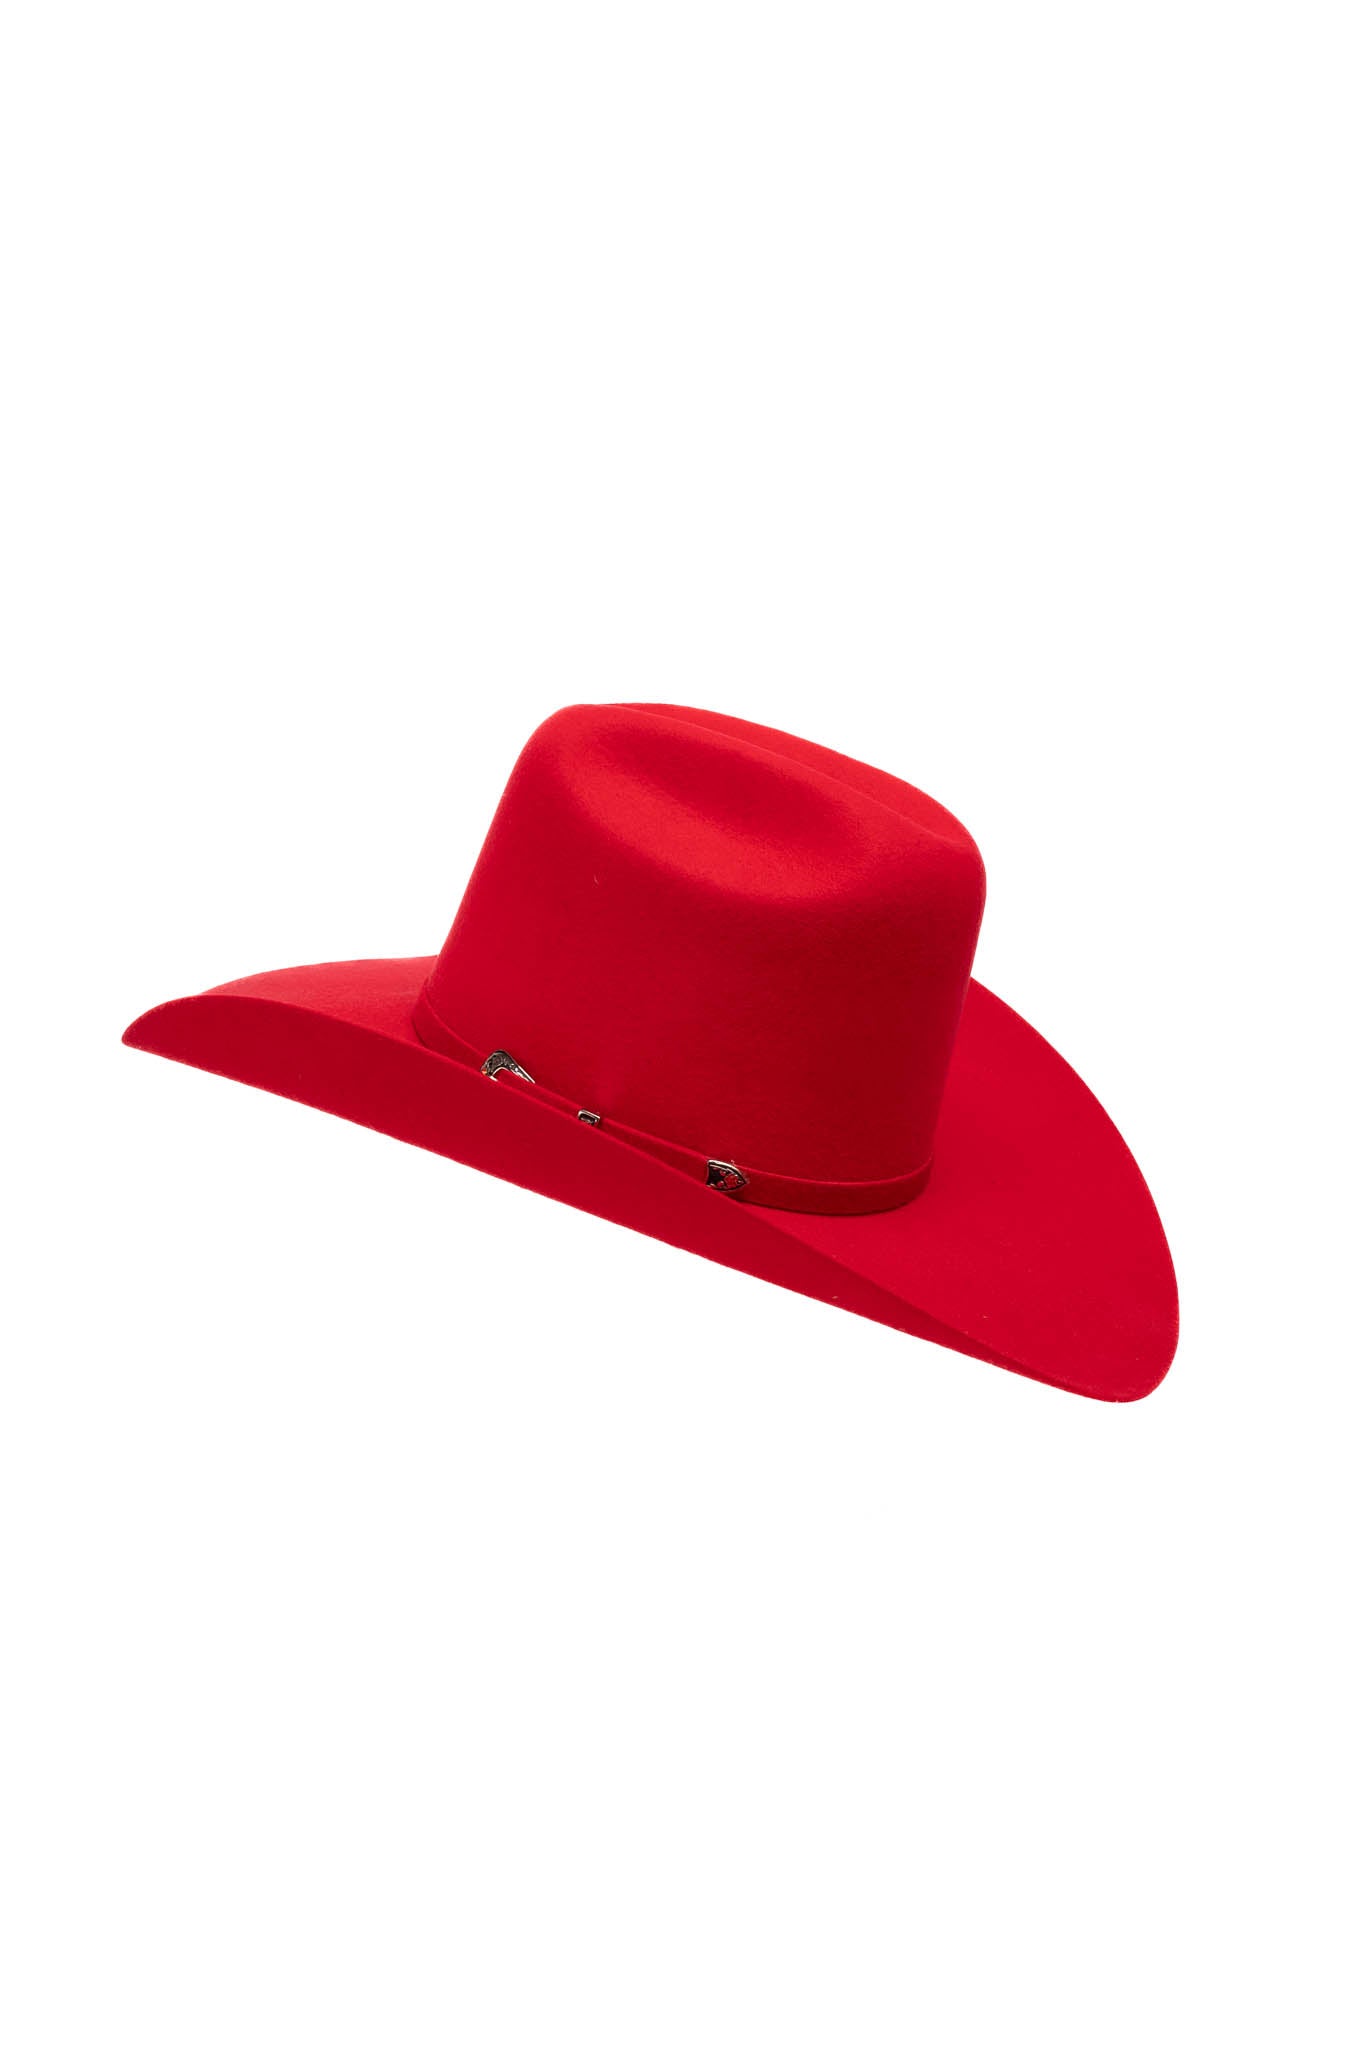 Damian 6X Tall Crown Felt Hat Limited Edition